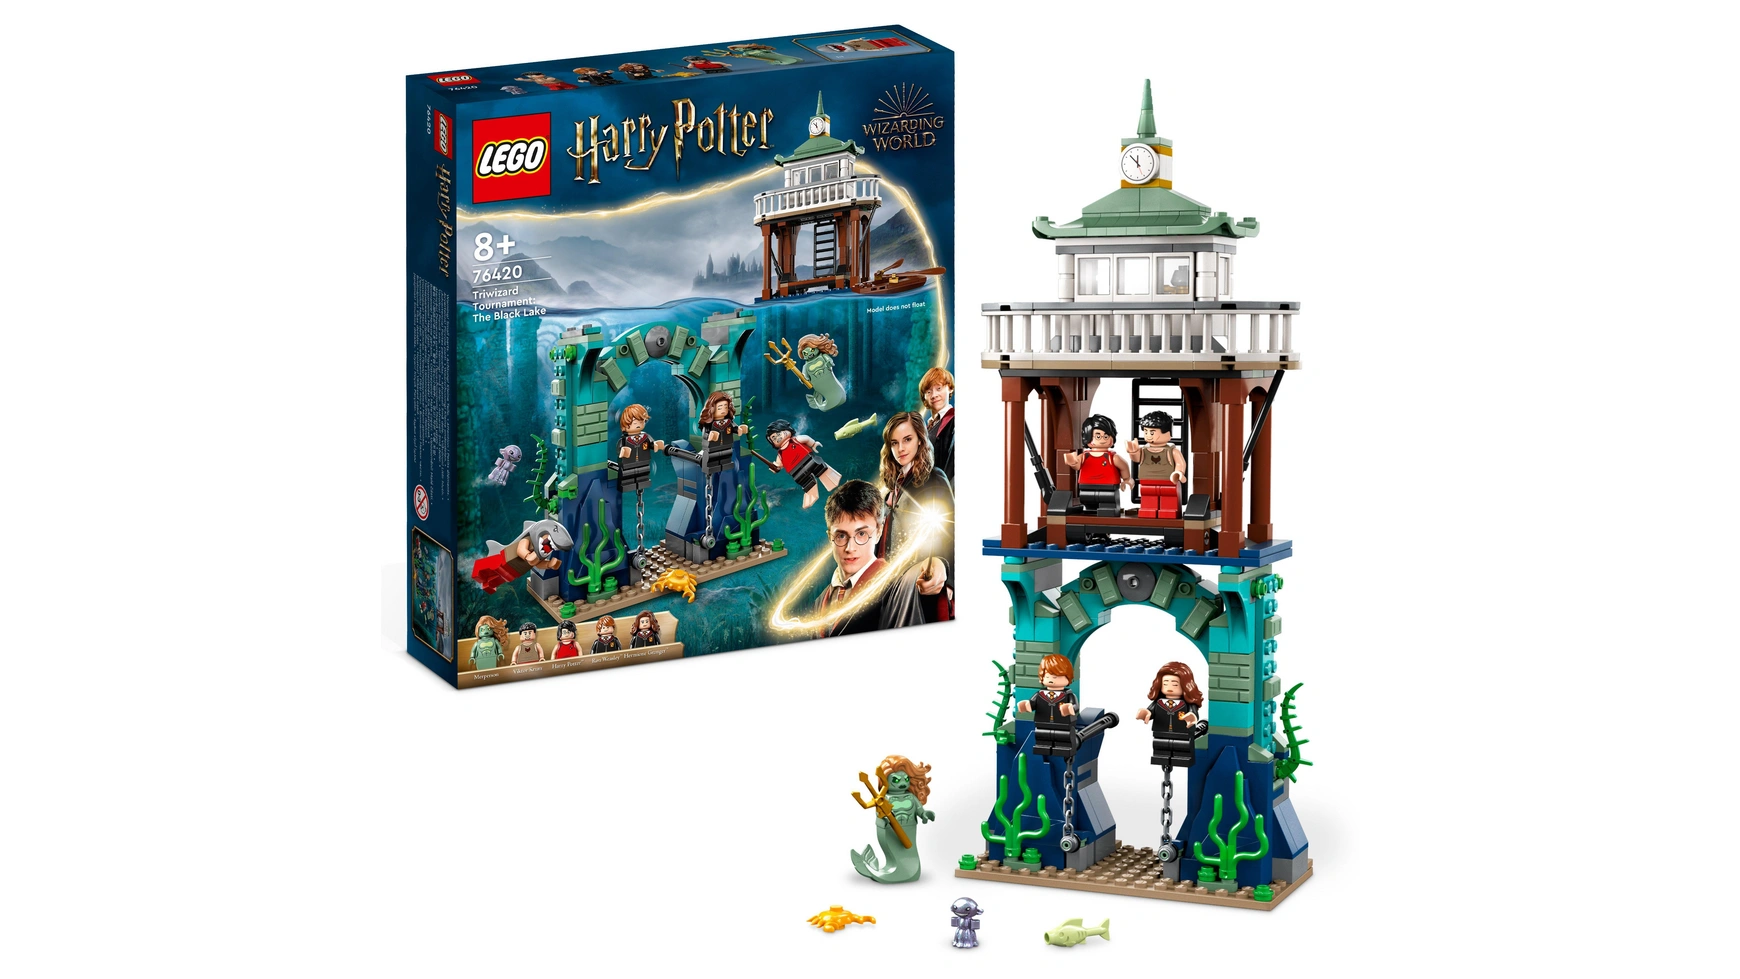 Lego Harry Potter Турнир трех волшебников: Черное озеро набор harry potter сумка platform 9 3 4 блокнот билет на хогвартс экспресс